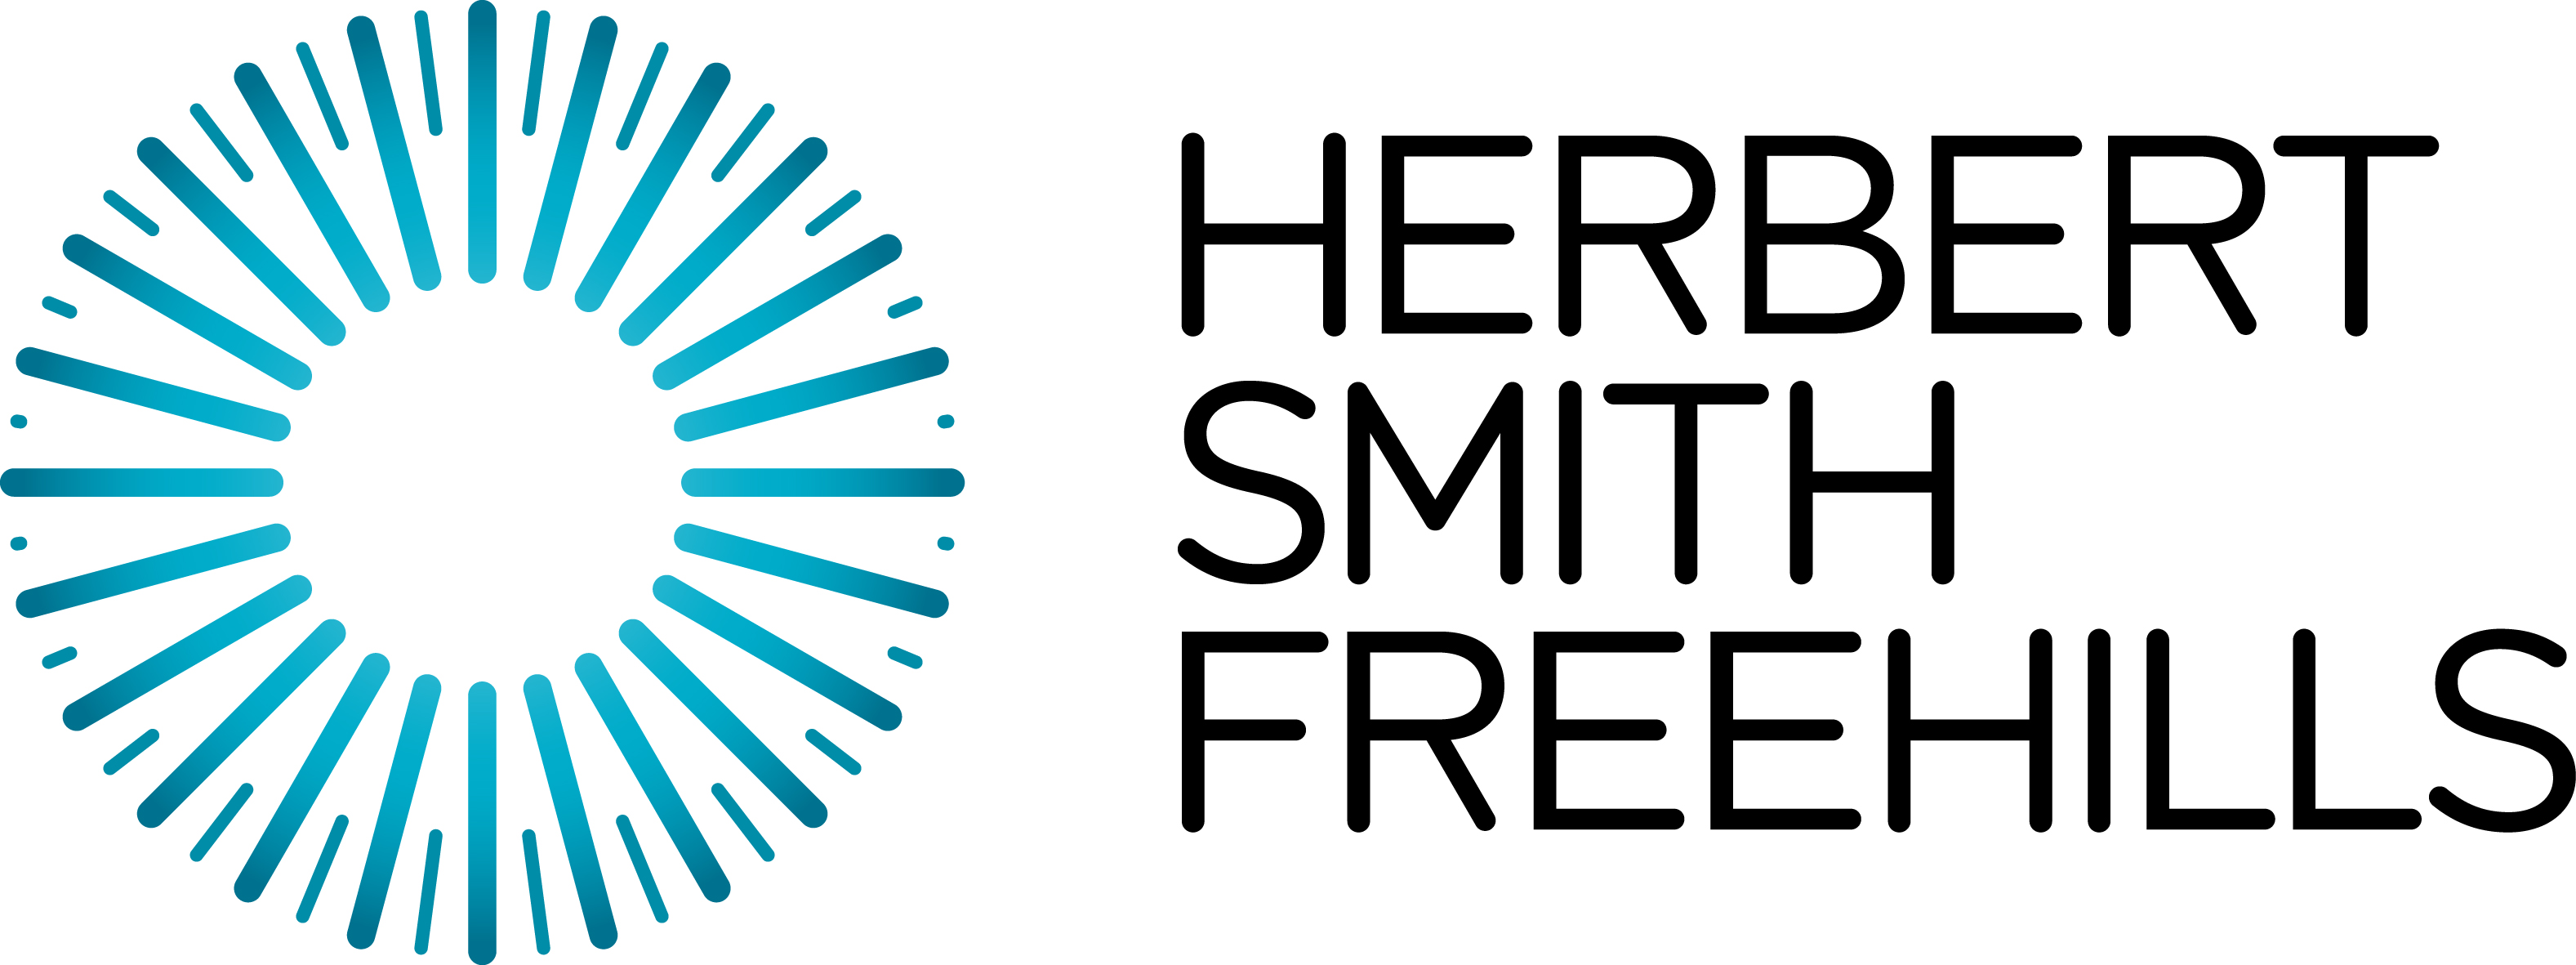 Pro bono action by Herbert Smith Freehills sparks commercial rejuvenation in Sierra Leone